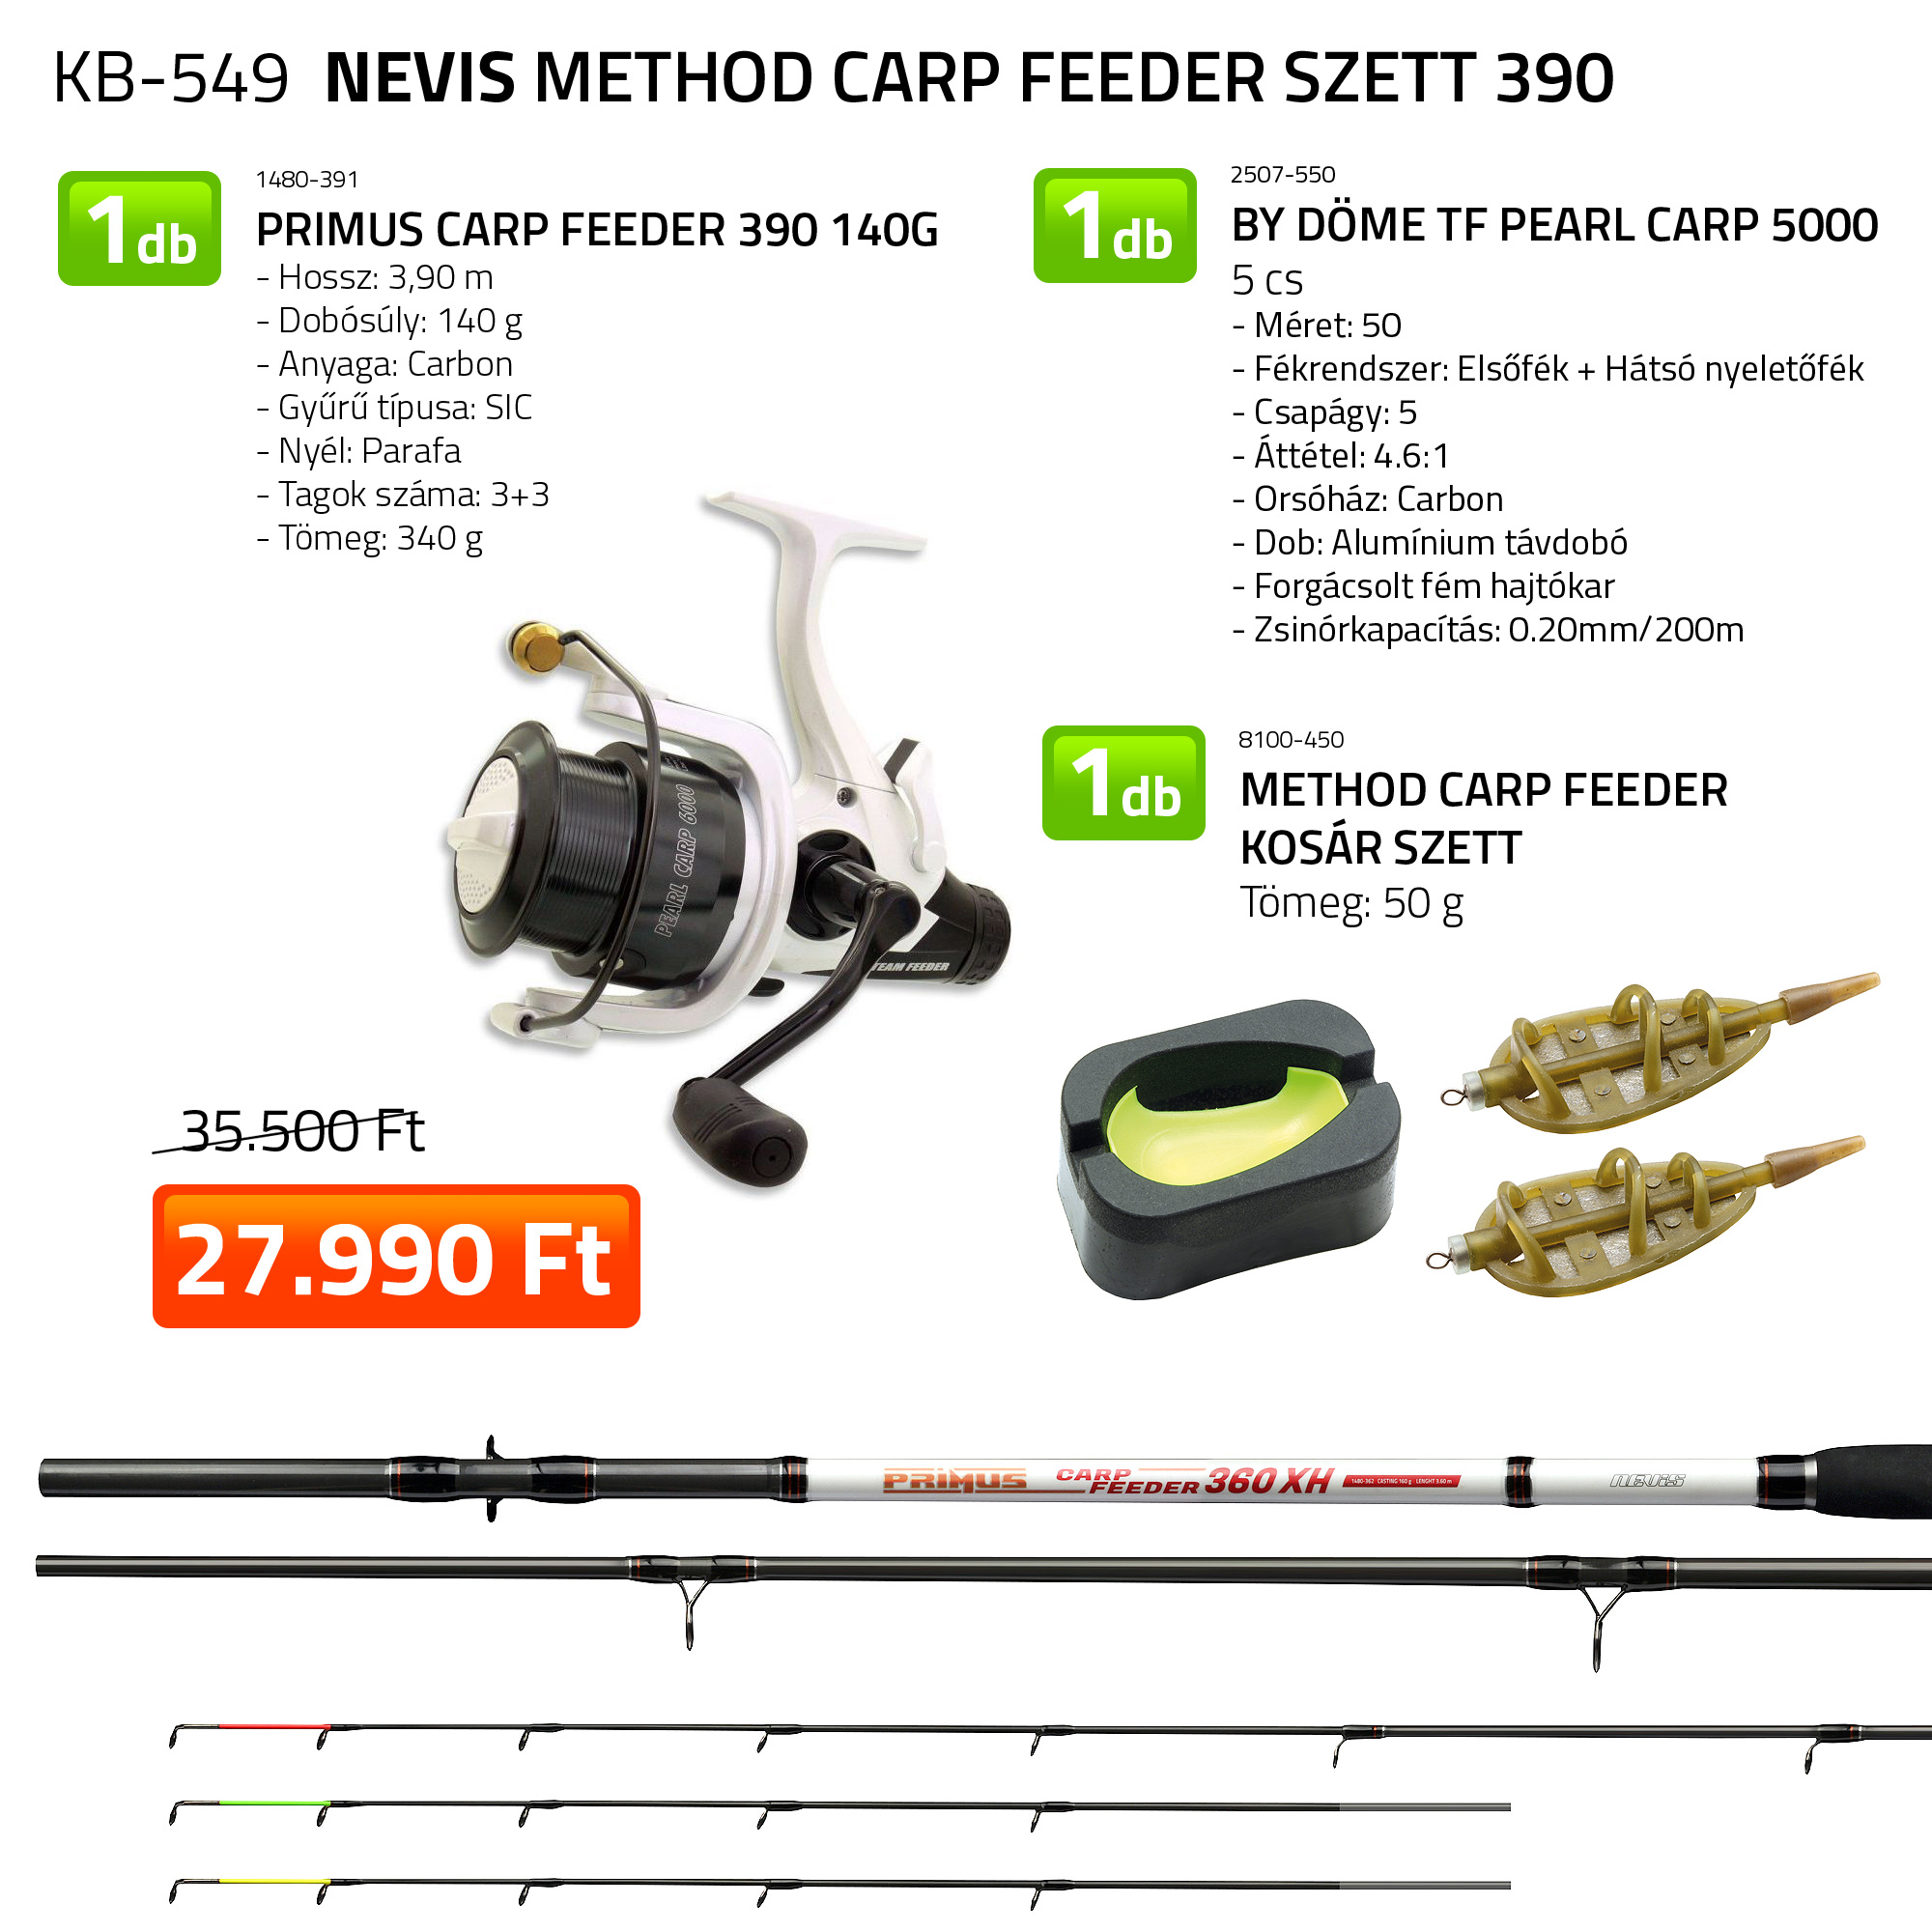 Nevis Method Carp feeder szett 390  1480-391+ 2507-550+ 8100-450